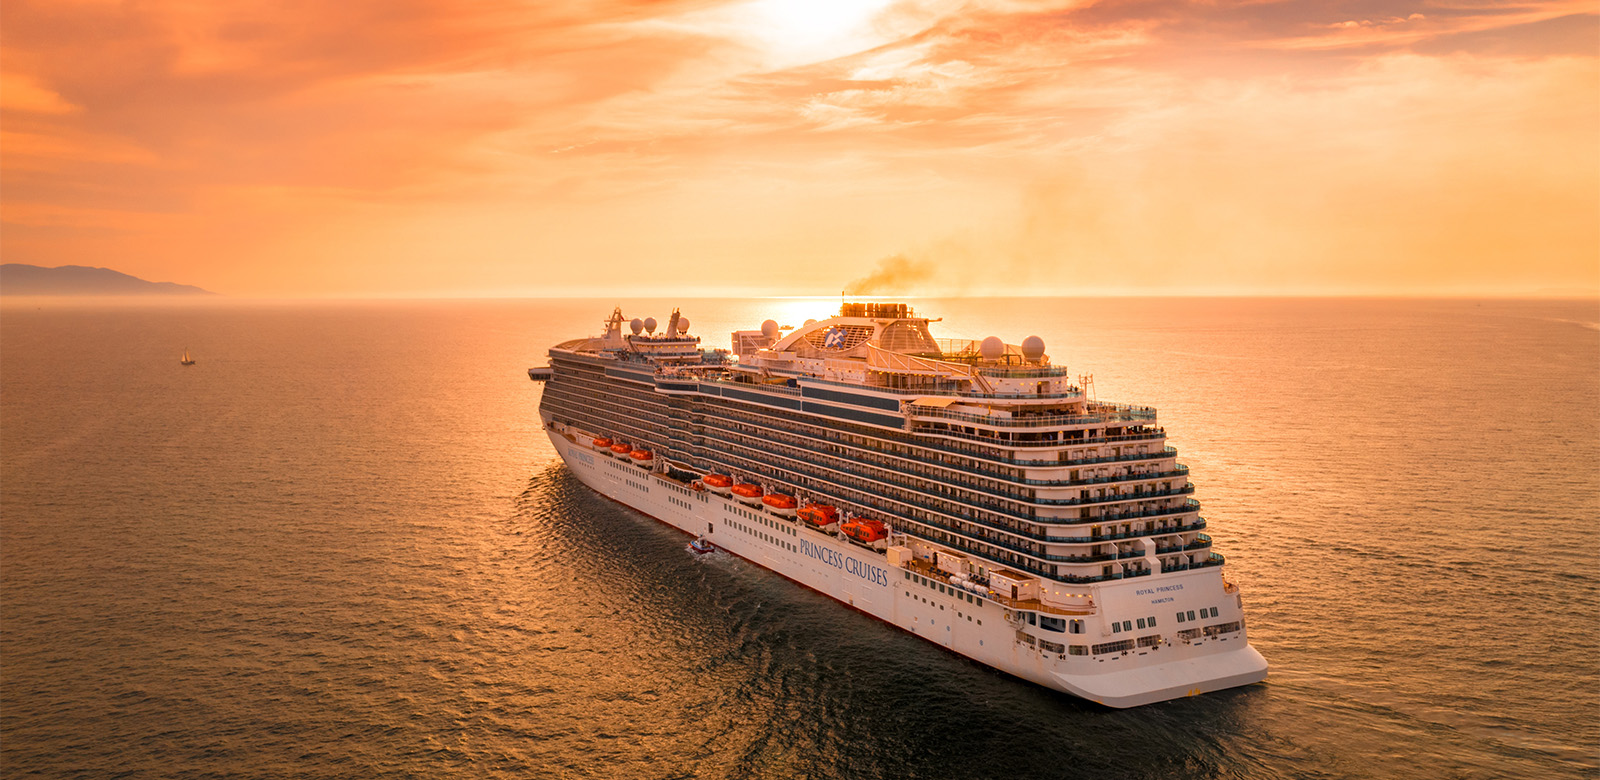 Cruise ship heading toward horizon at sunset